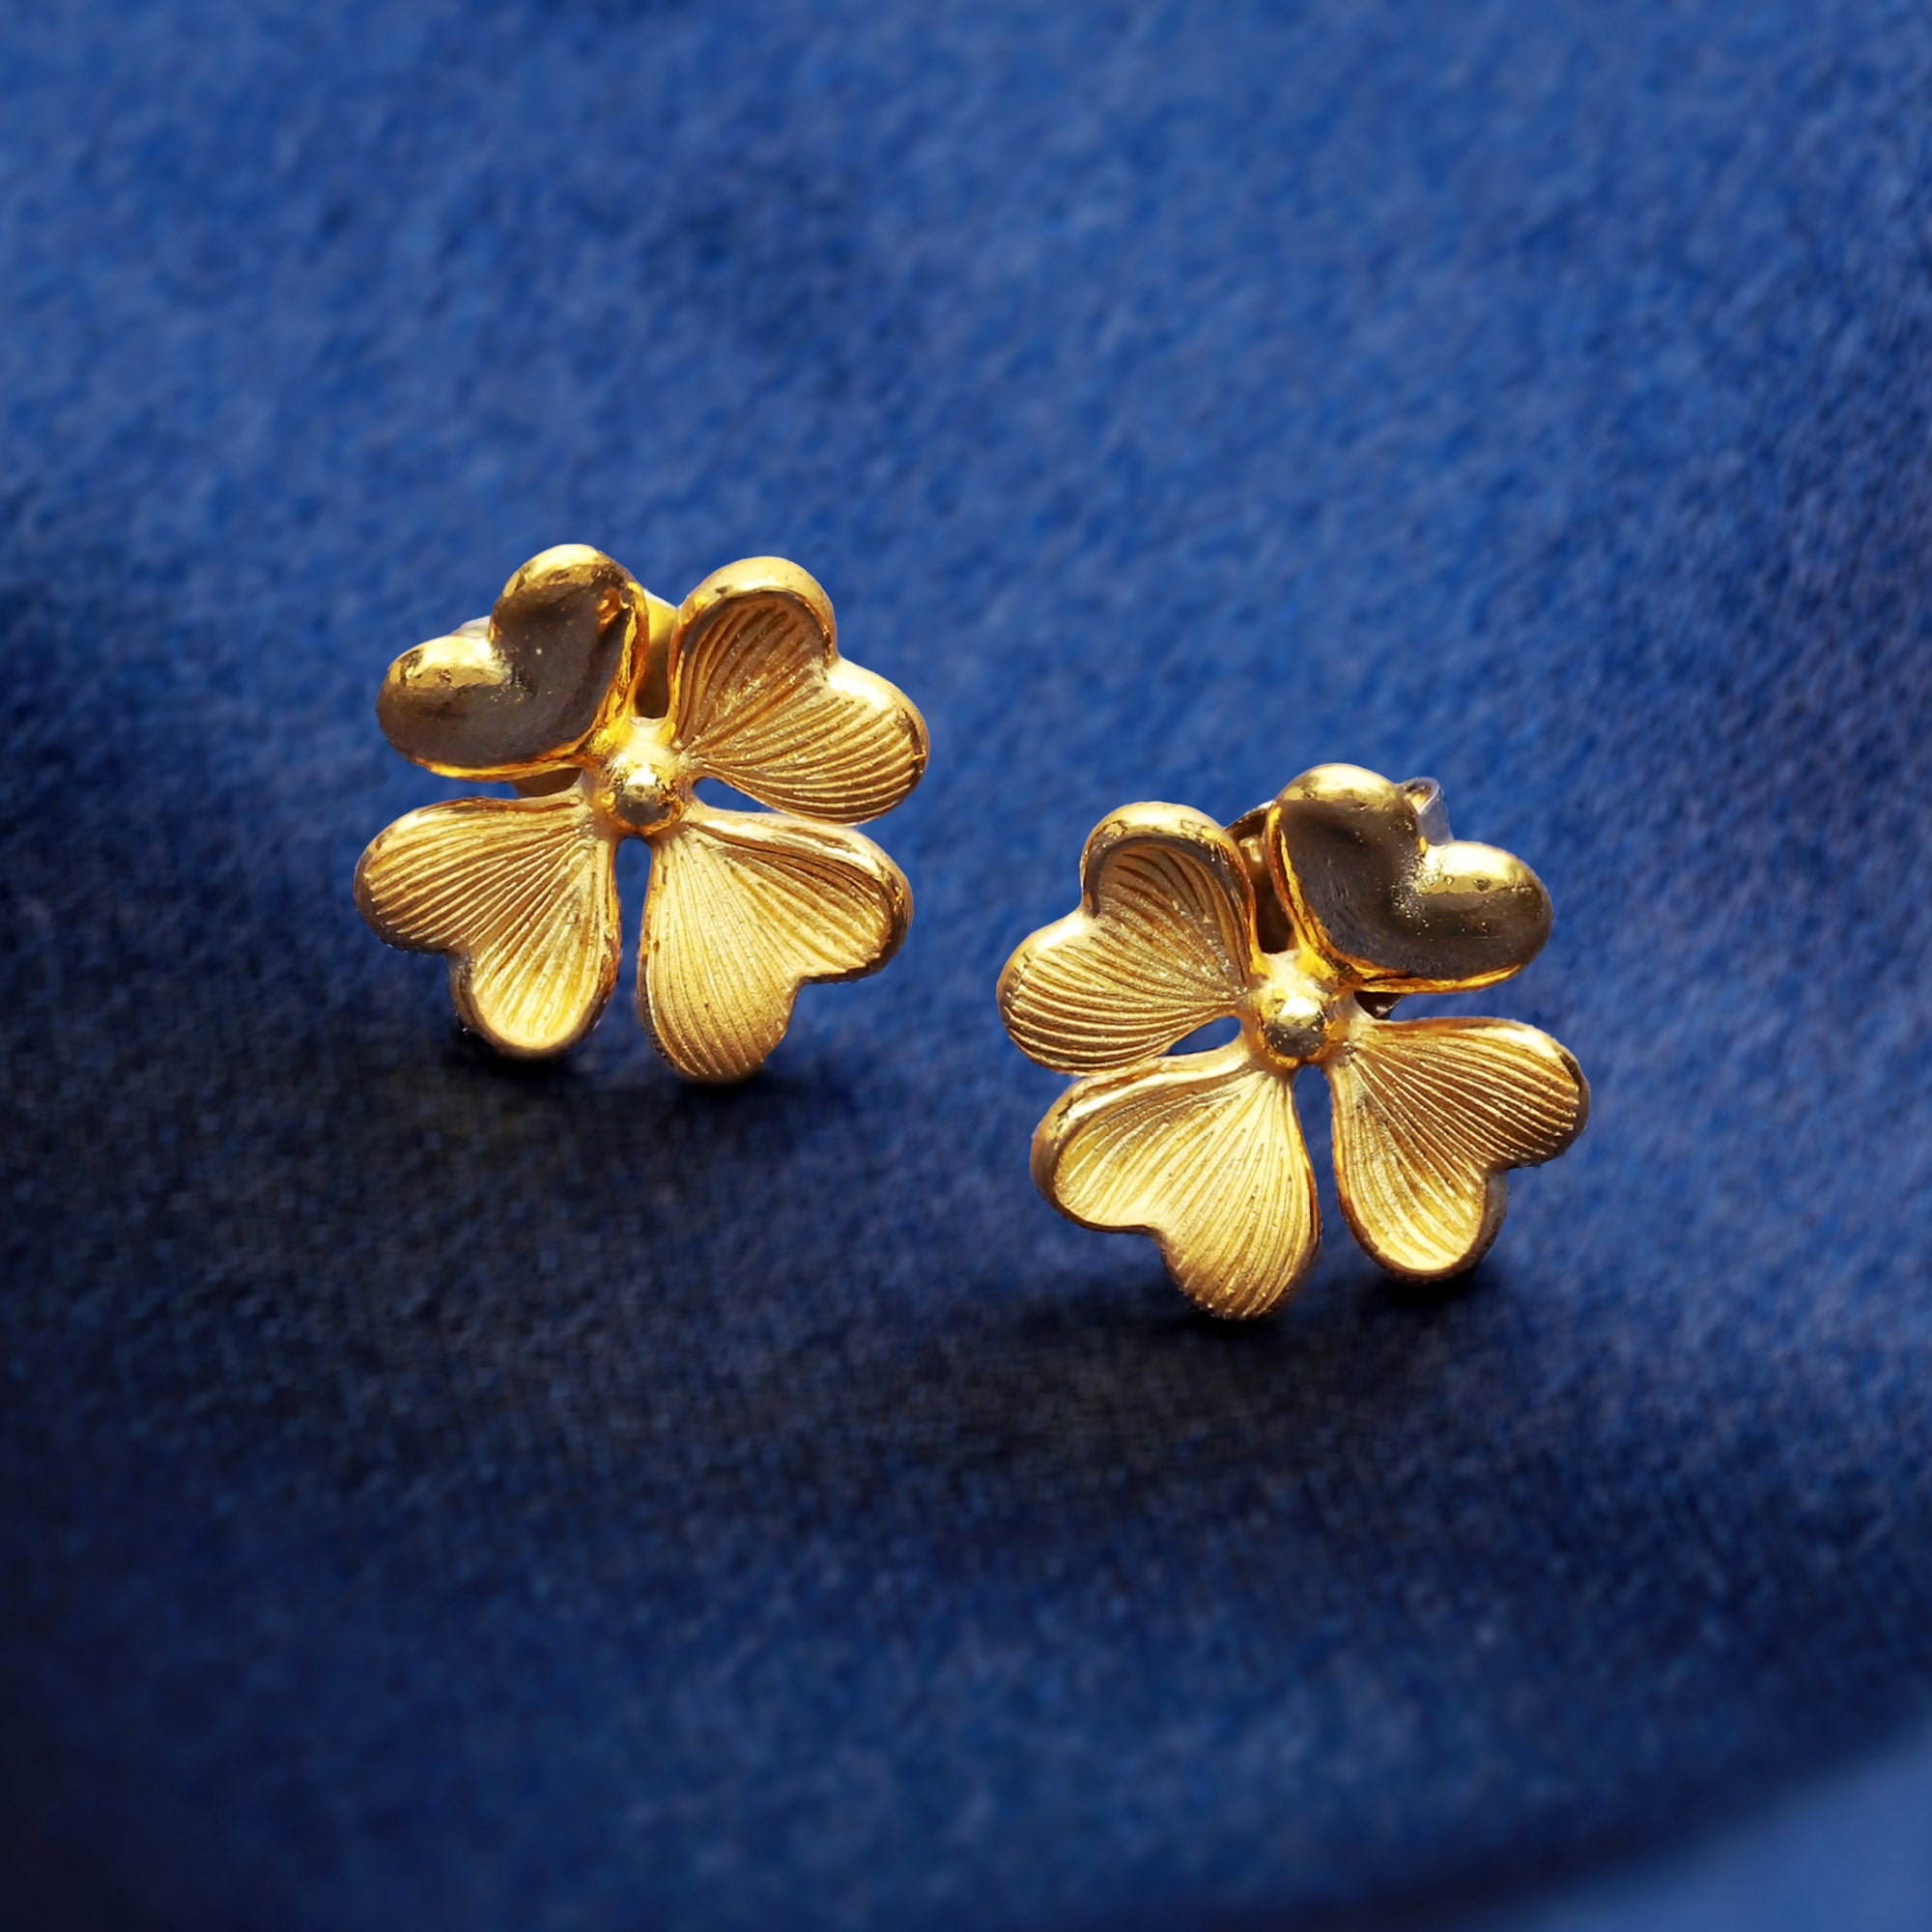 Shining Jewel Traditonal Gold Stud Earrings for Women (SJ_1936)